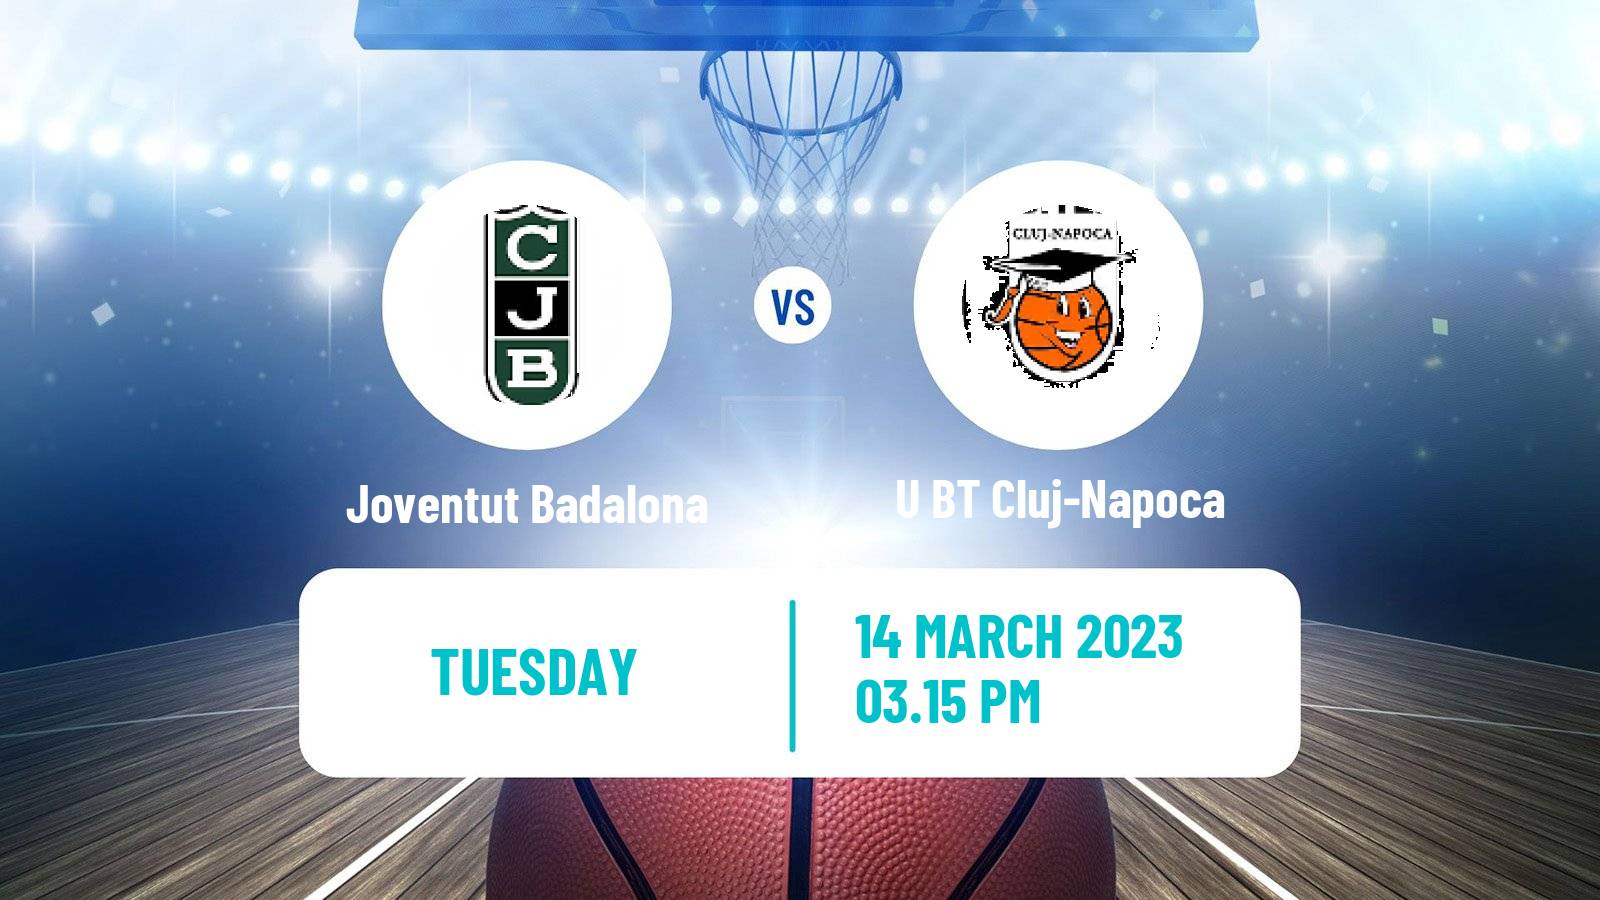 Basketball Eurocup Joventut Badalona - U BT Cluj-Napoca